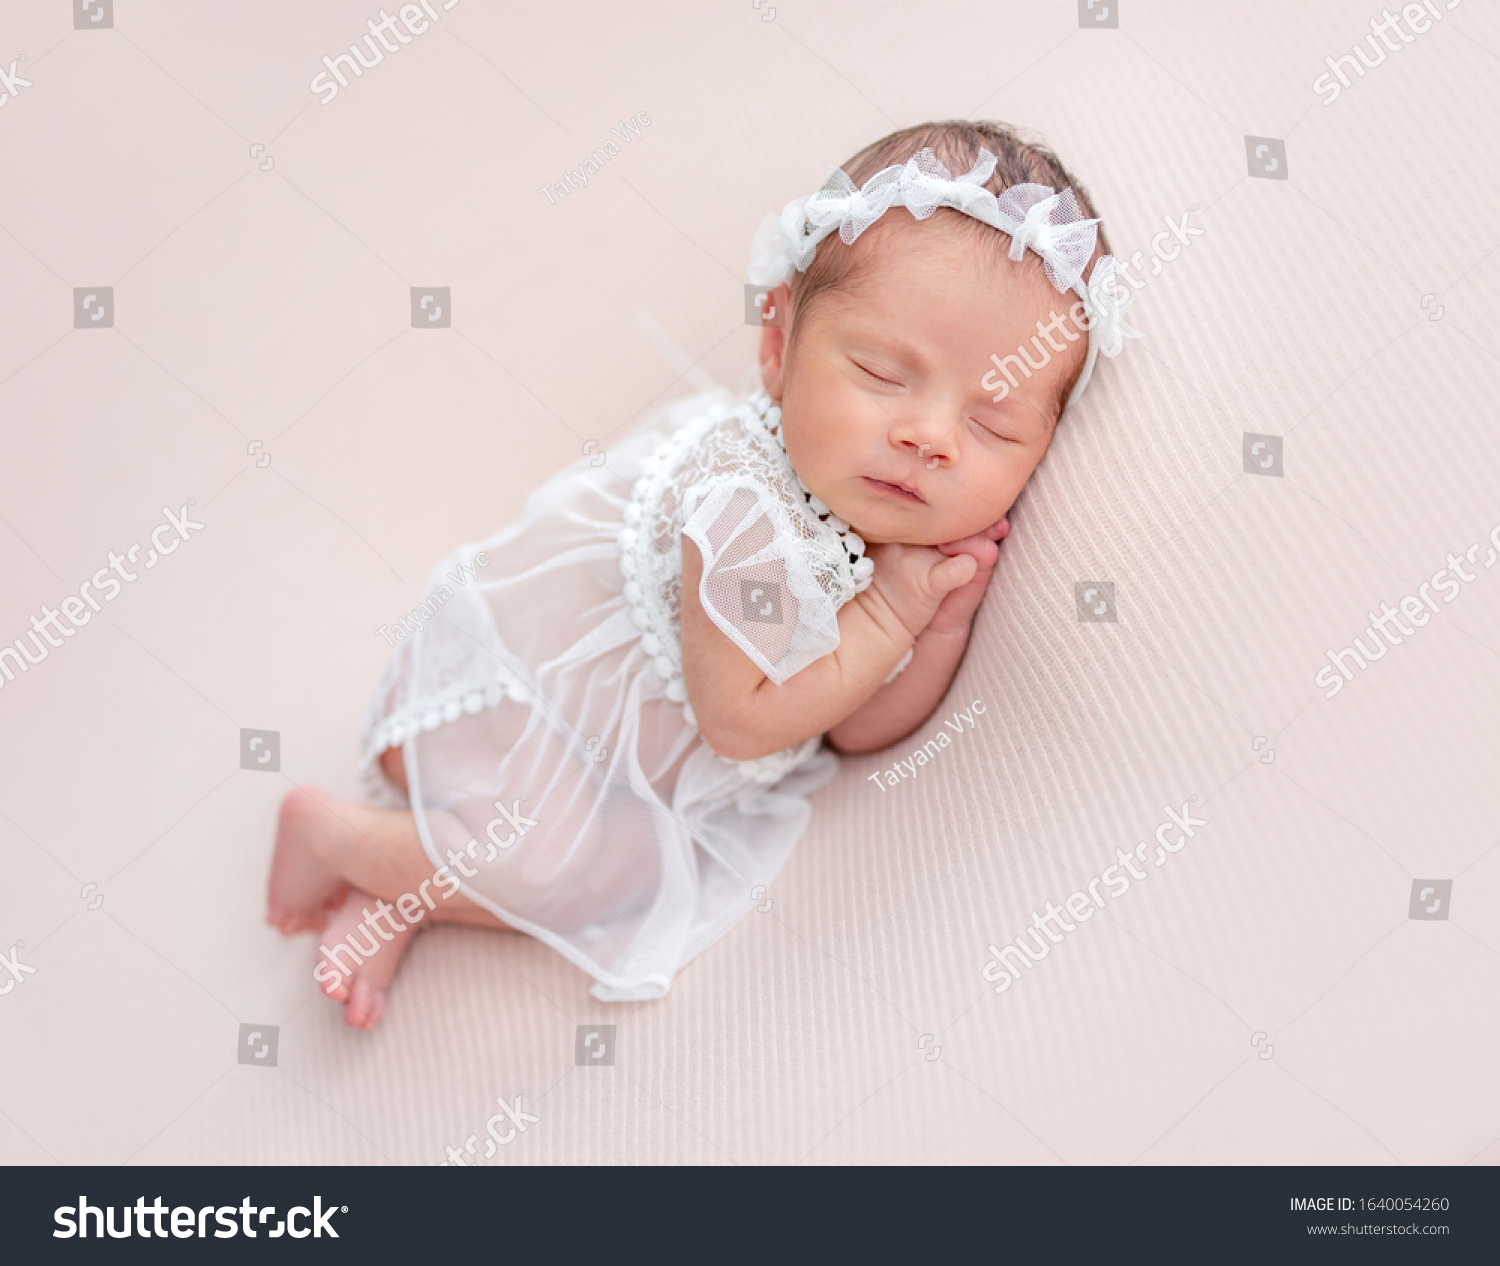 Innocent newborn angel in cute outfit #1640054260